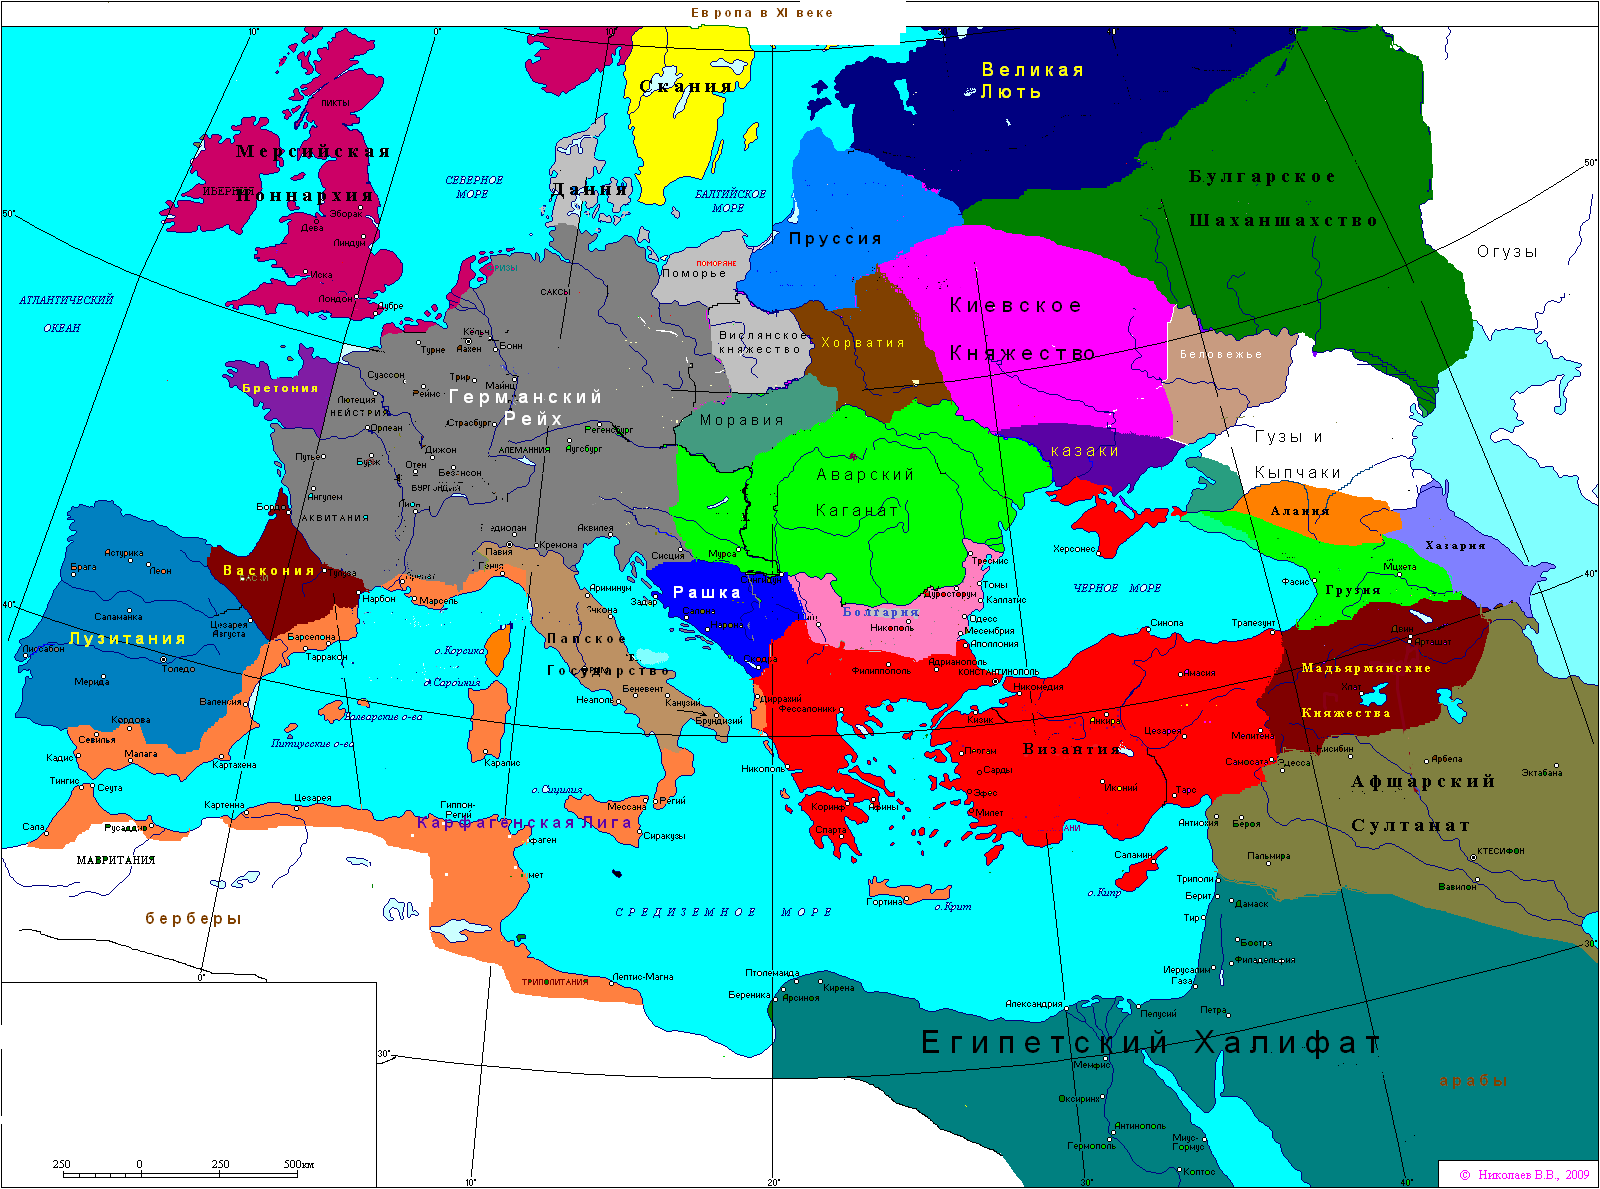 Европа 13 14 века. Карта Европы 11 века. Карта Европы 10-11 веков. Карта Европы 10 век. Карта Европы 11-12 века.